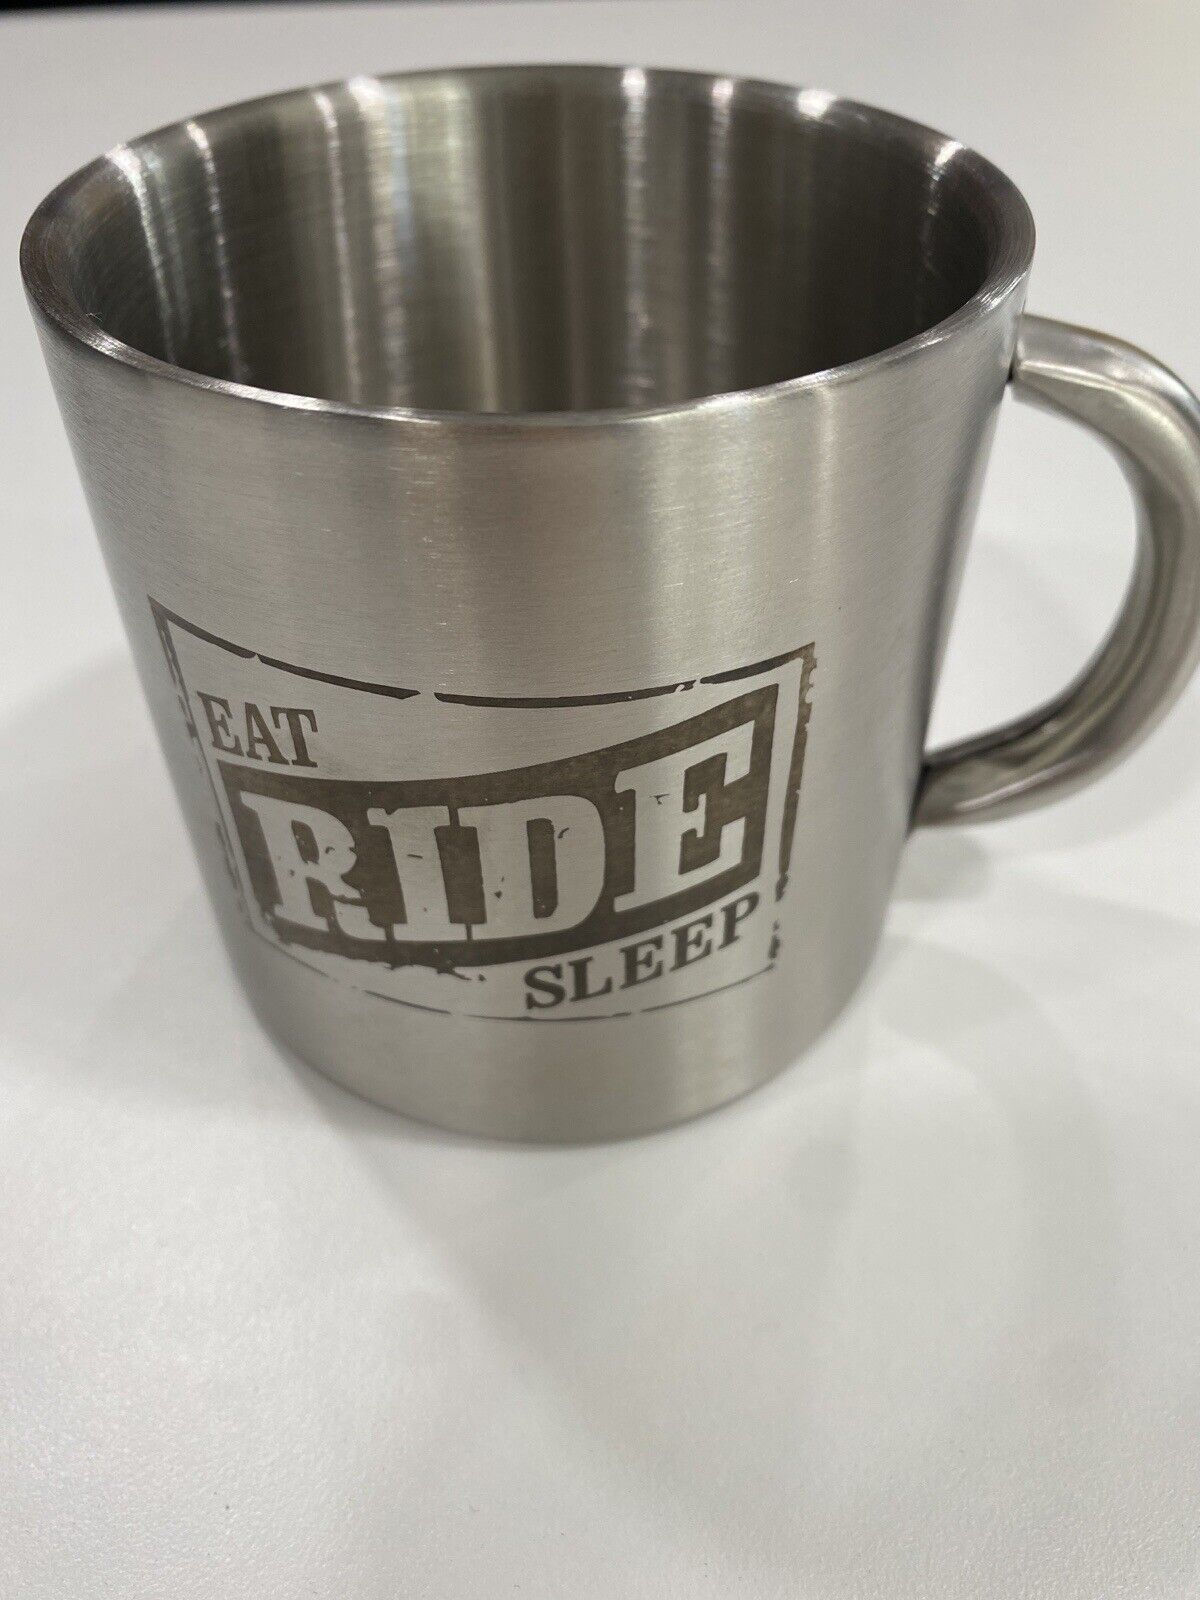 Eat Ride Sleep Stainless Steel Coffee Beverage Mugs Cups Set of 4 New In Box